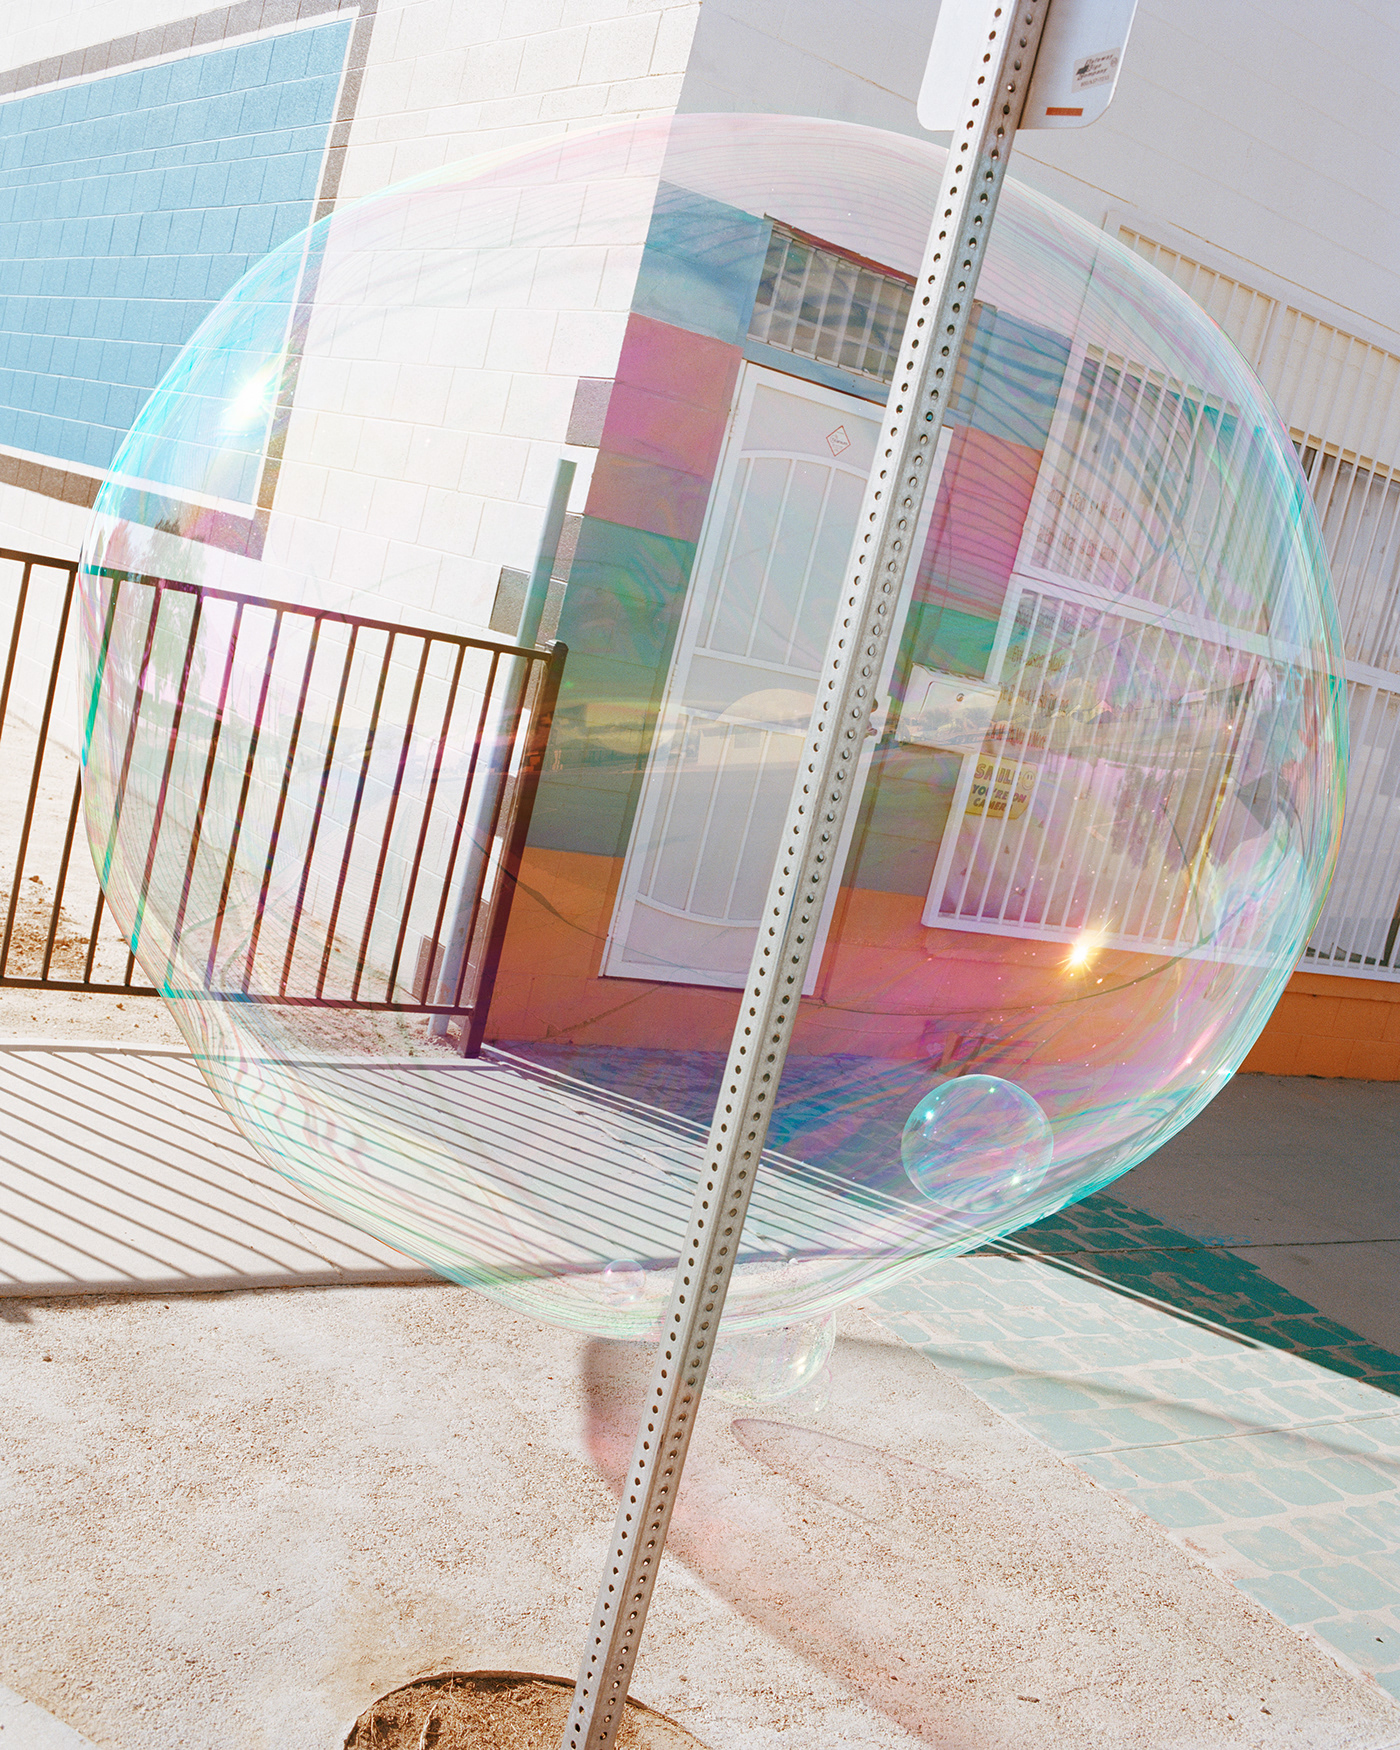 bubbles Playful Street CGI pastel